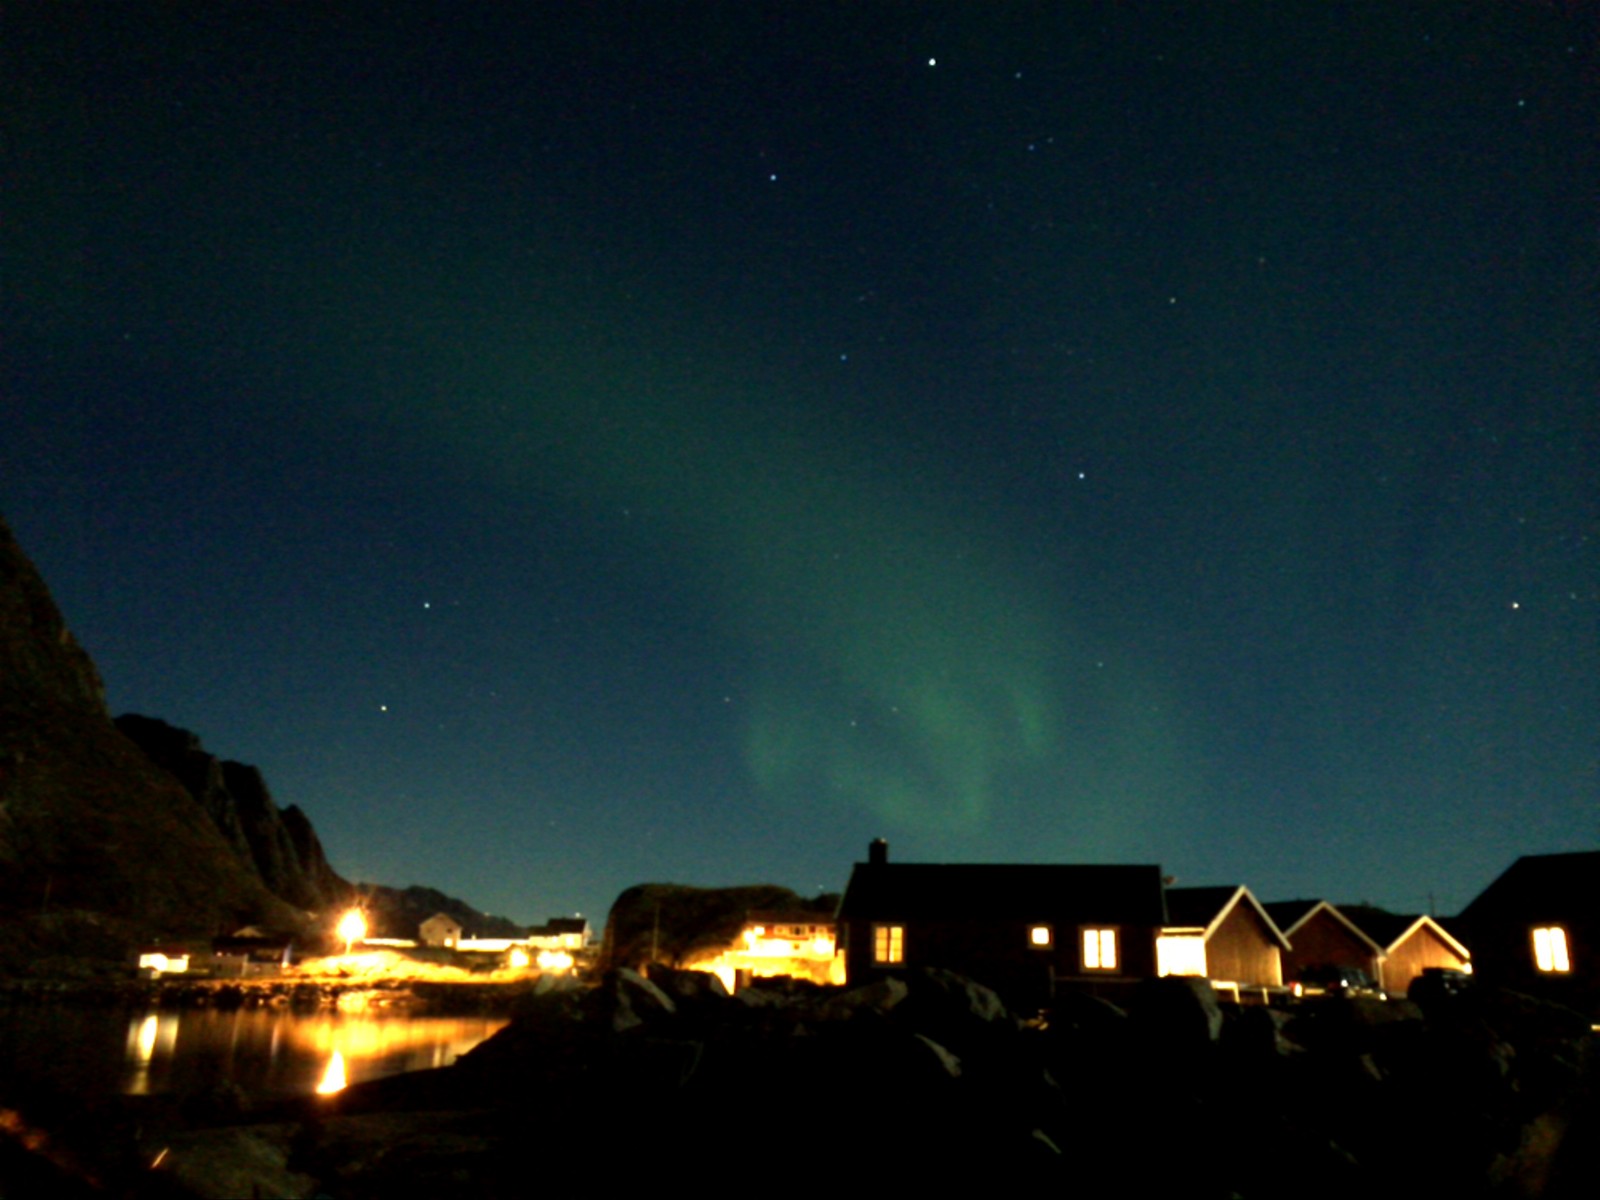 Image1 - Northern Lights Shot On Iphone - HD Wallpaper 